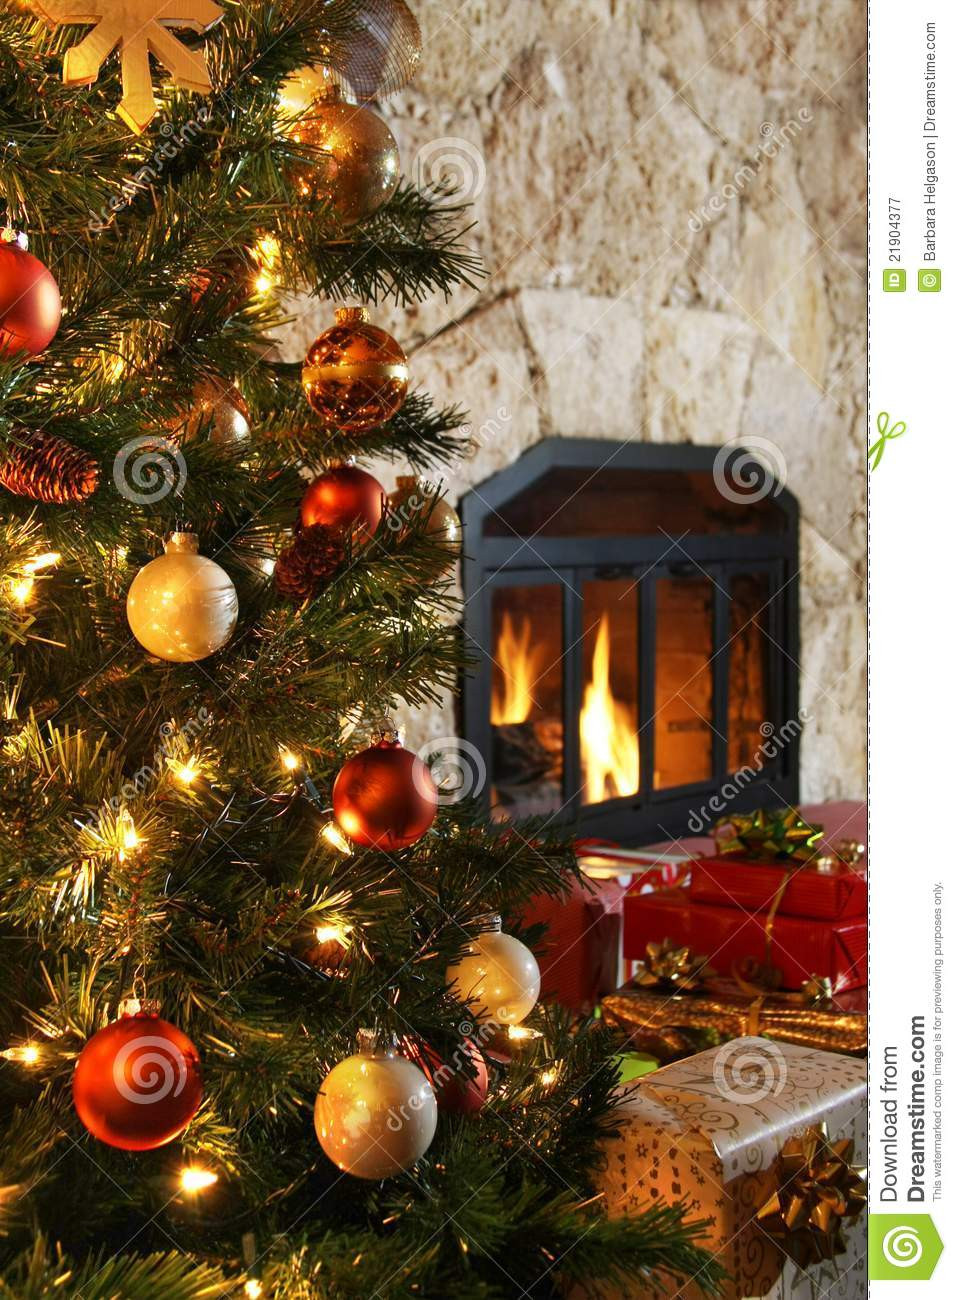 Christmas Tree Next To Fireplace
 Christmas Tree And Fireplace Stock Image Image of flame